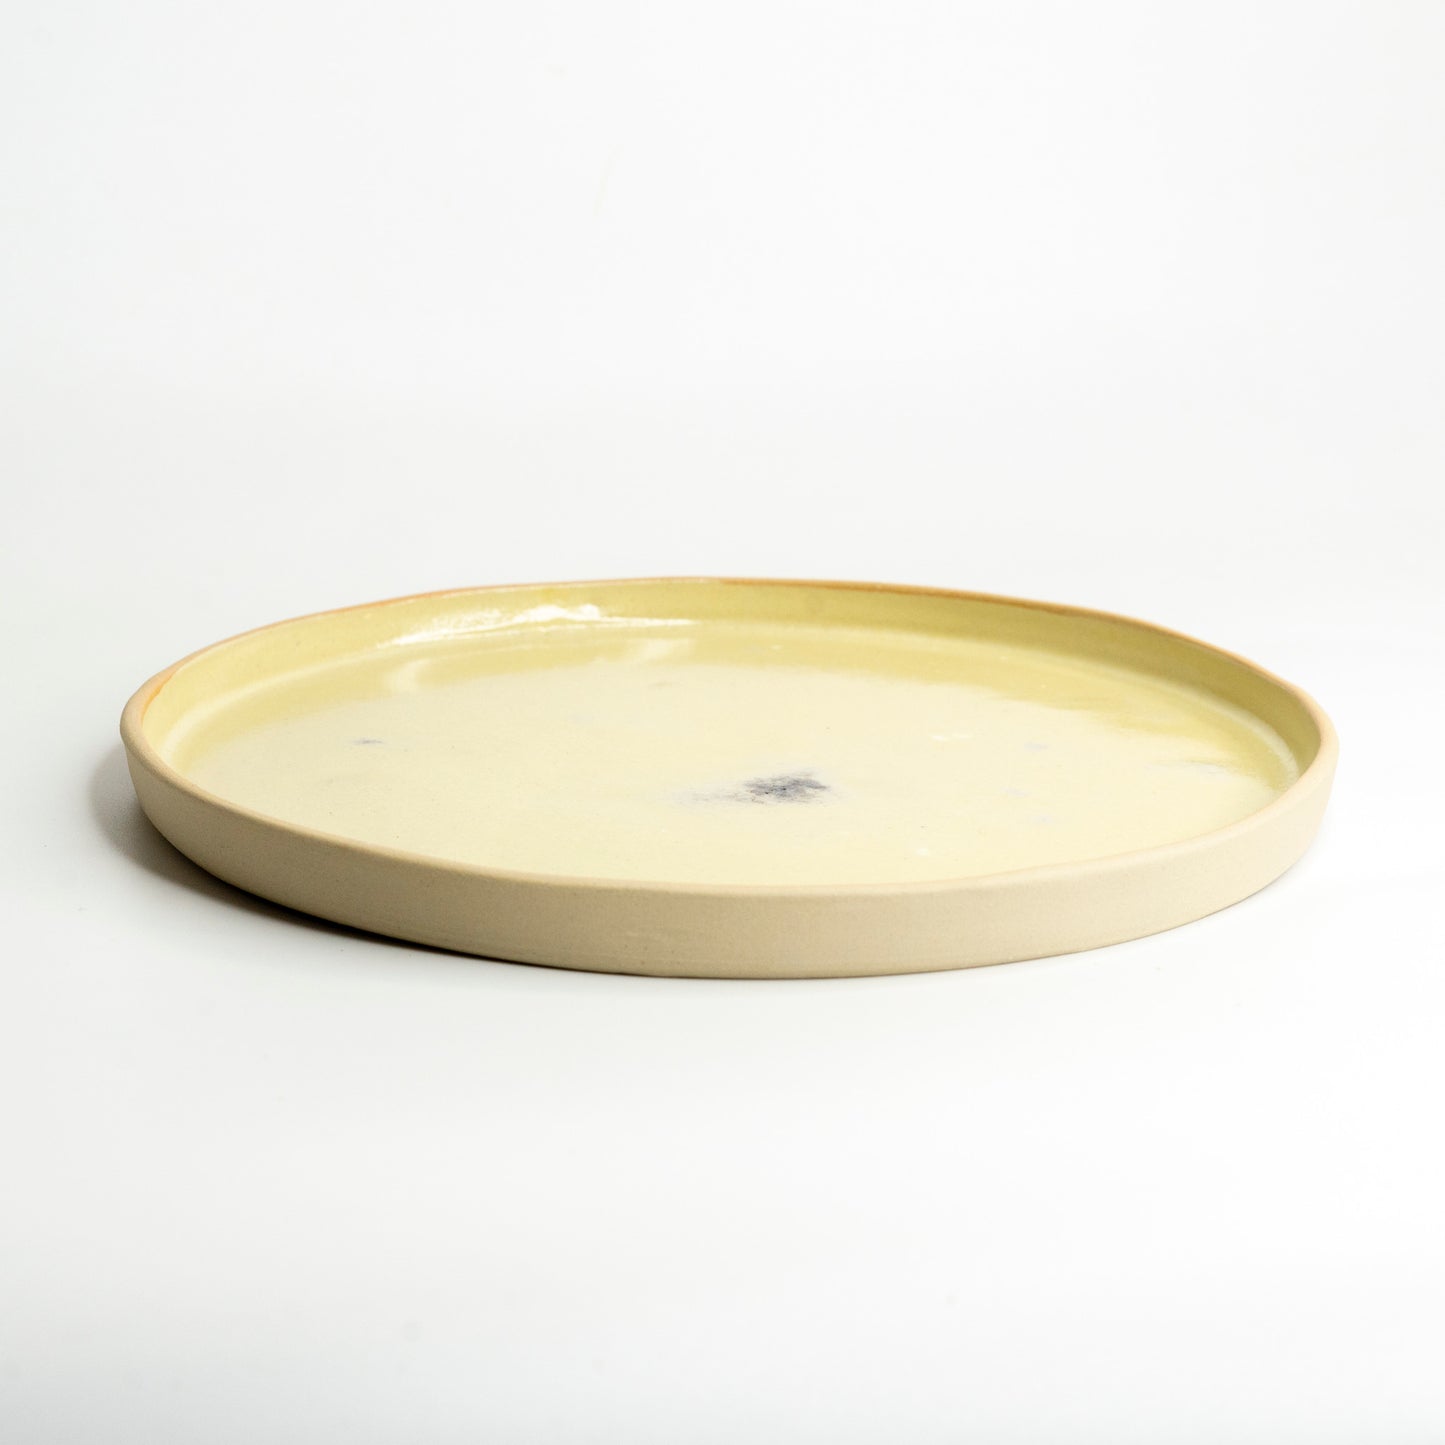 Large plate - Buttermilk